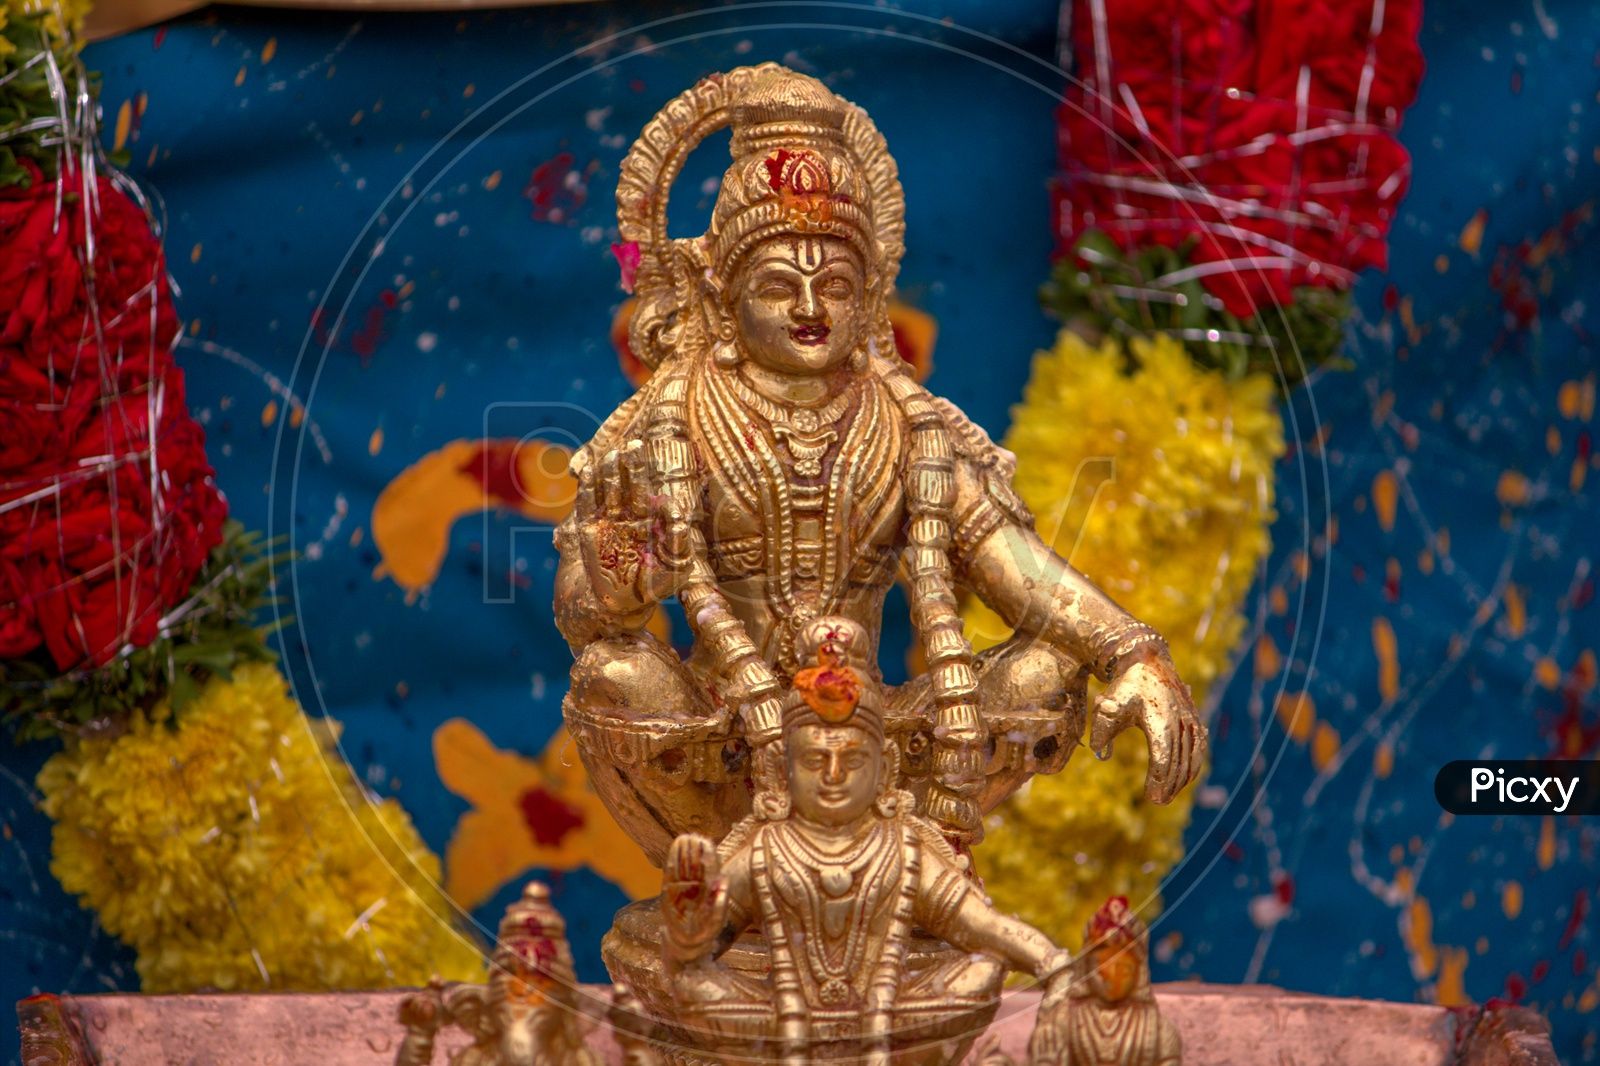 Image Of Ayyappa Swami Idol In Ayyappa Swami Pooja GD589207 Picxy